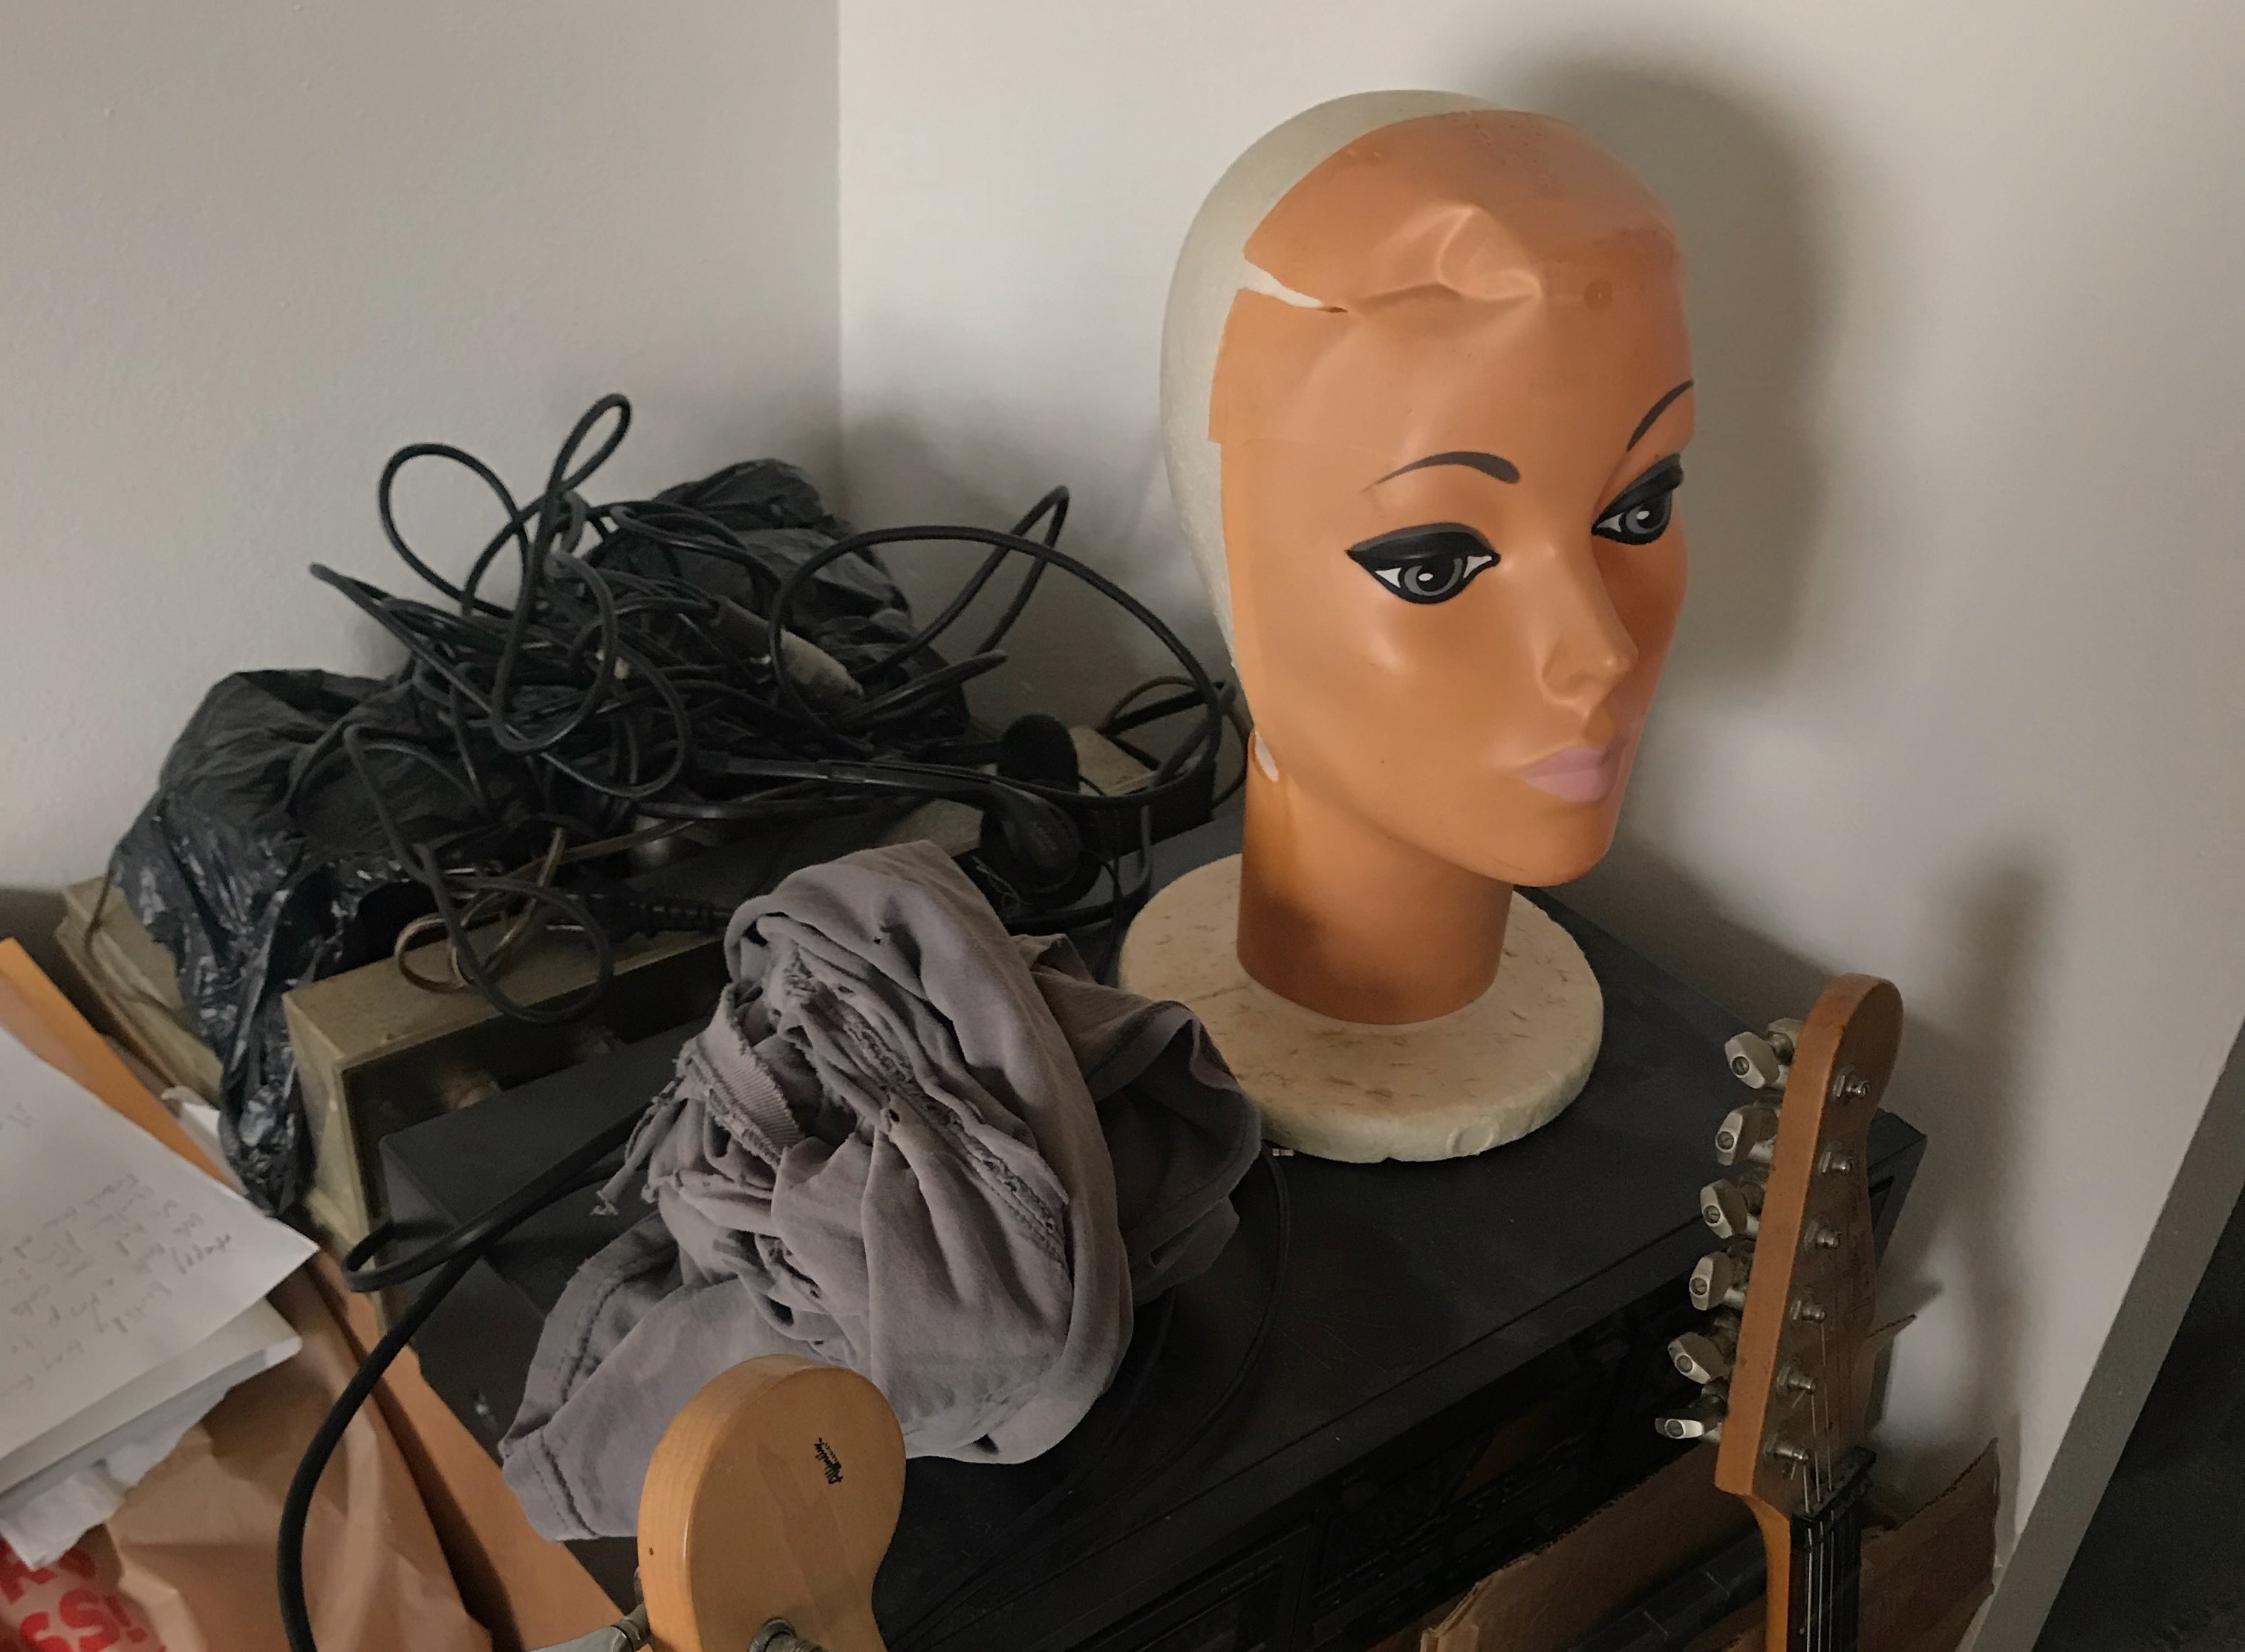 mannequin head, tangled guitar chords, guitars, paper, shirt